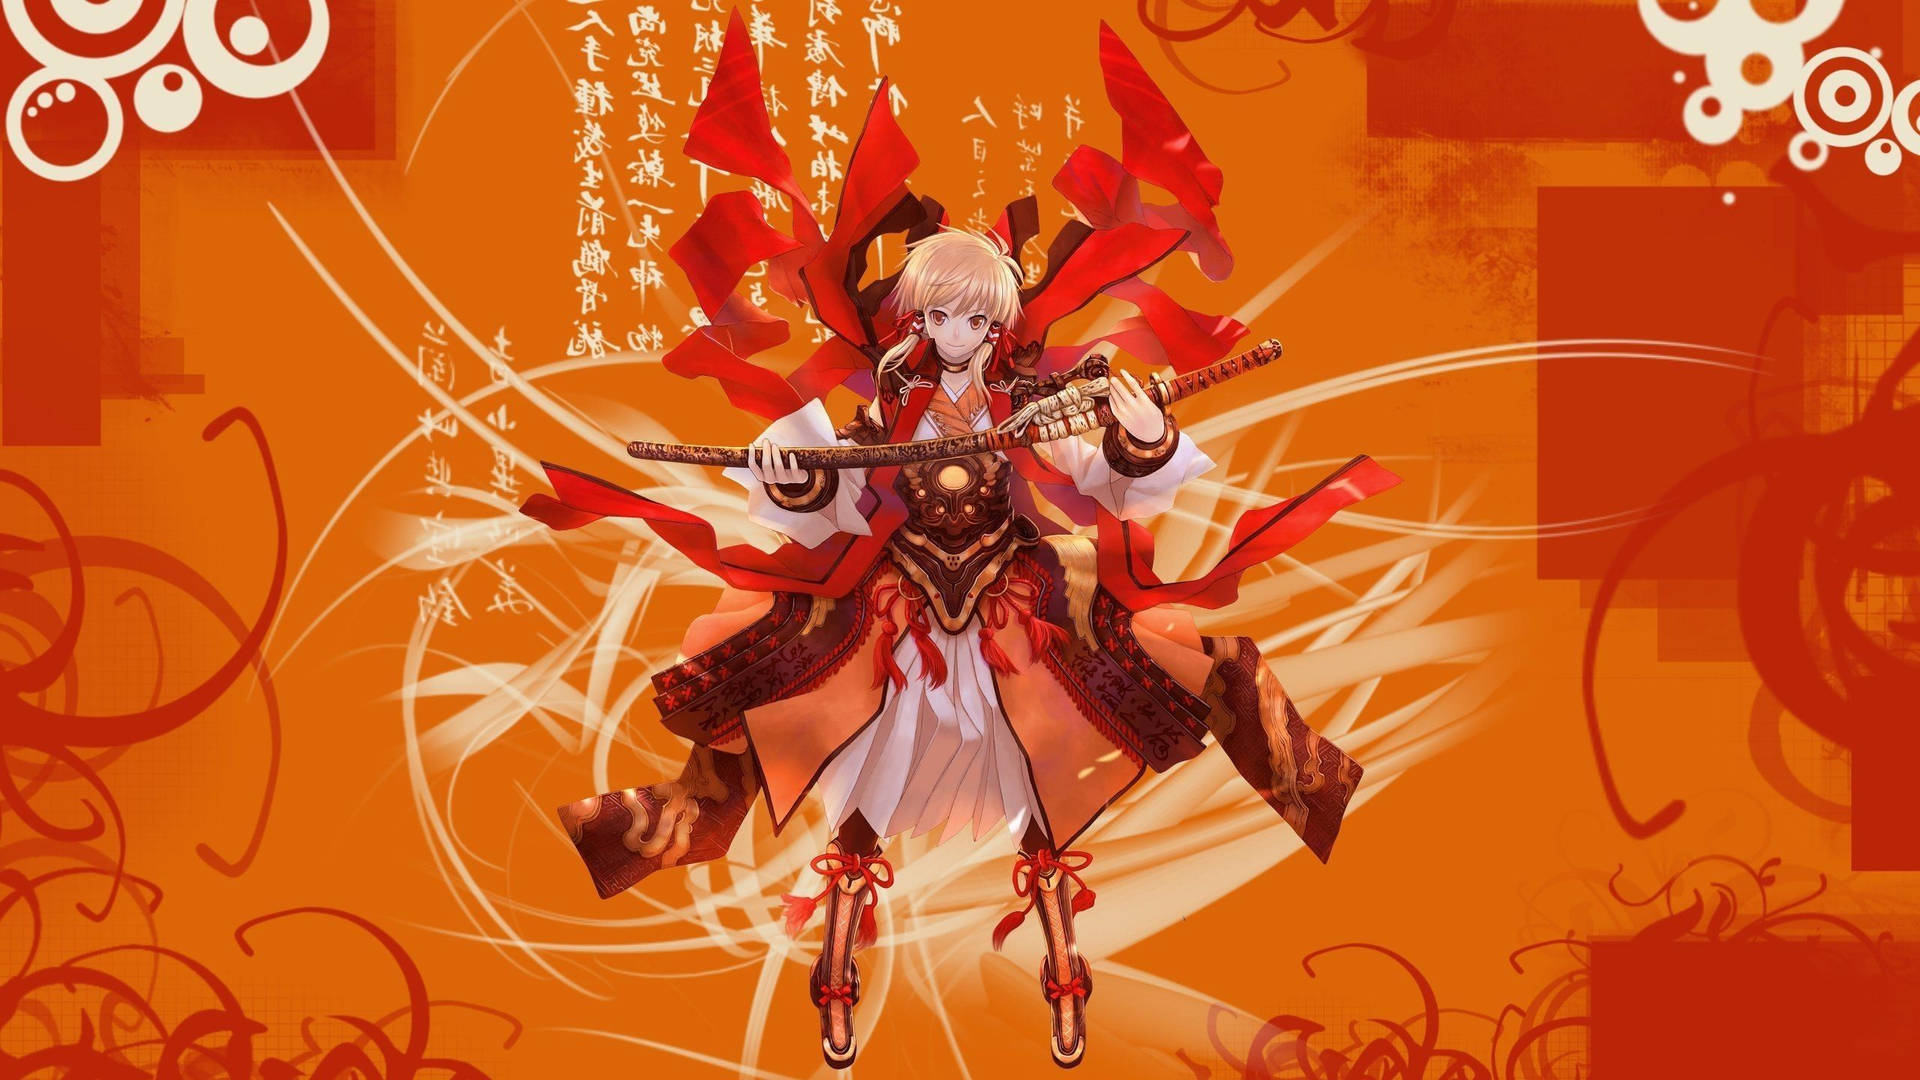 Fullmetal Alchemist 2560X1440 Wallpaper and Background Image